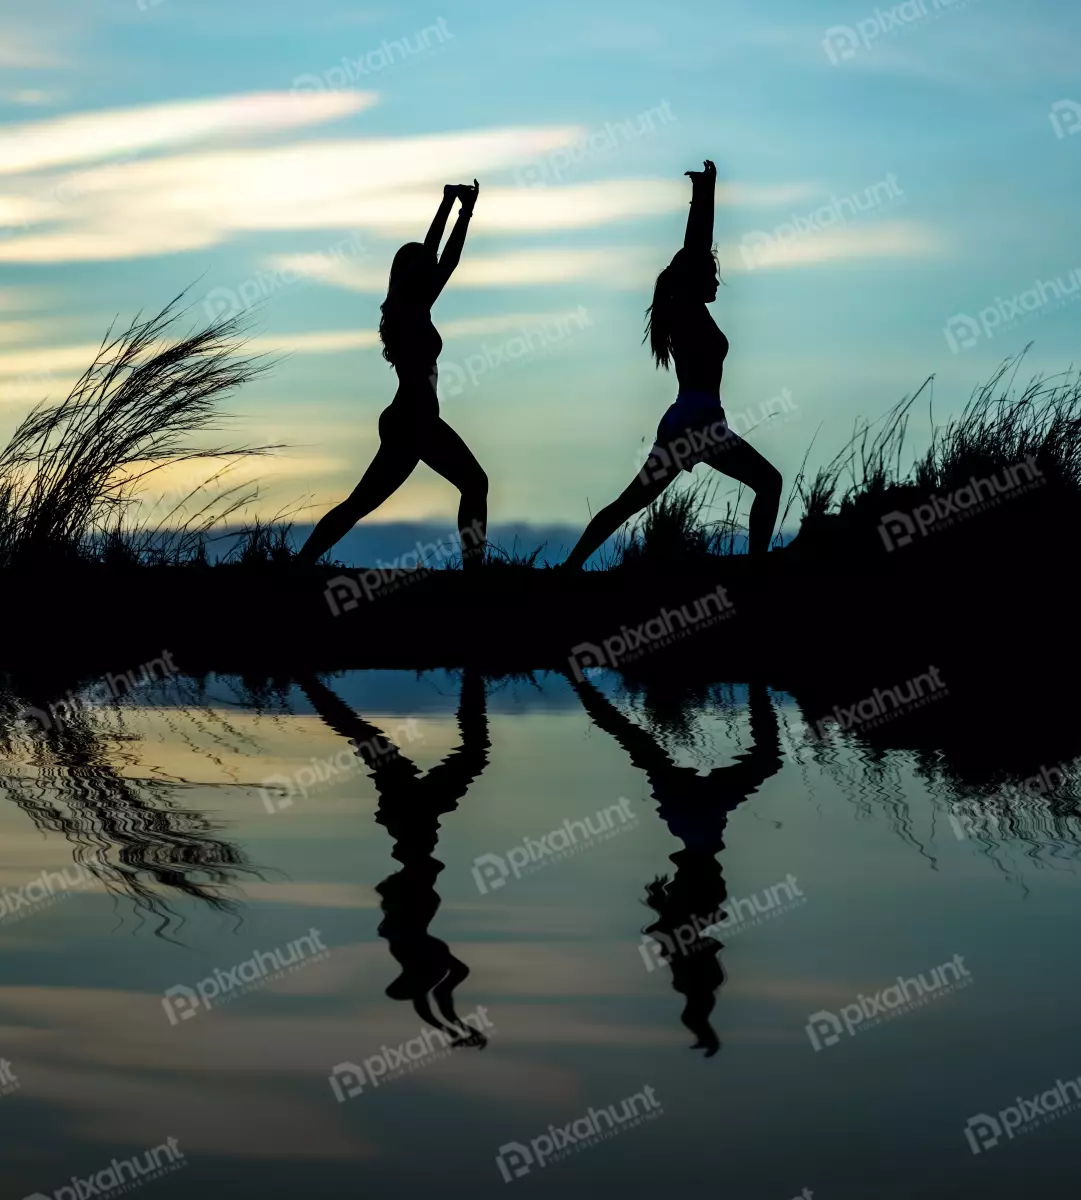 Free Premium Stock Photos Two women doing yoga on a beach at sunset